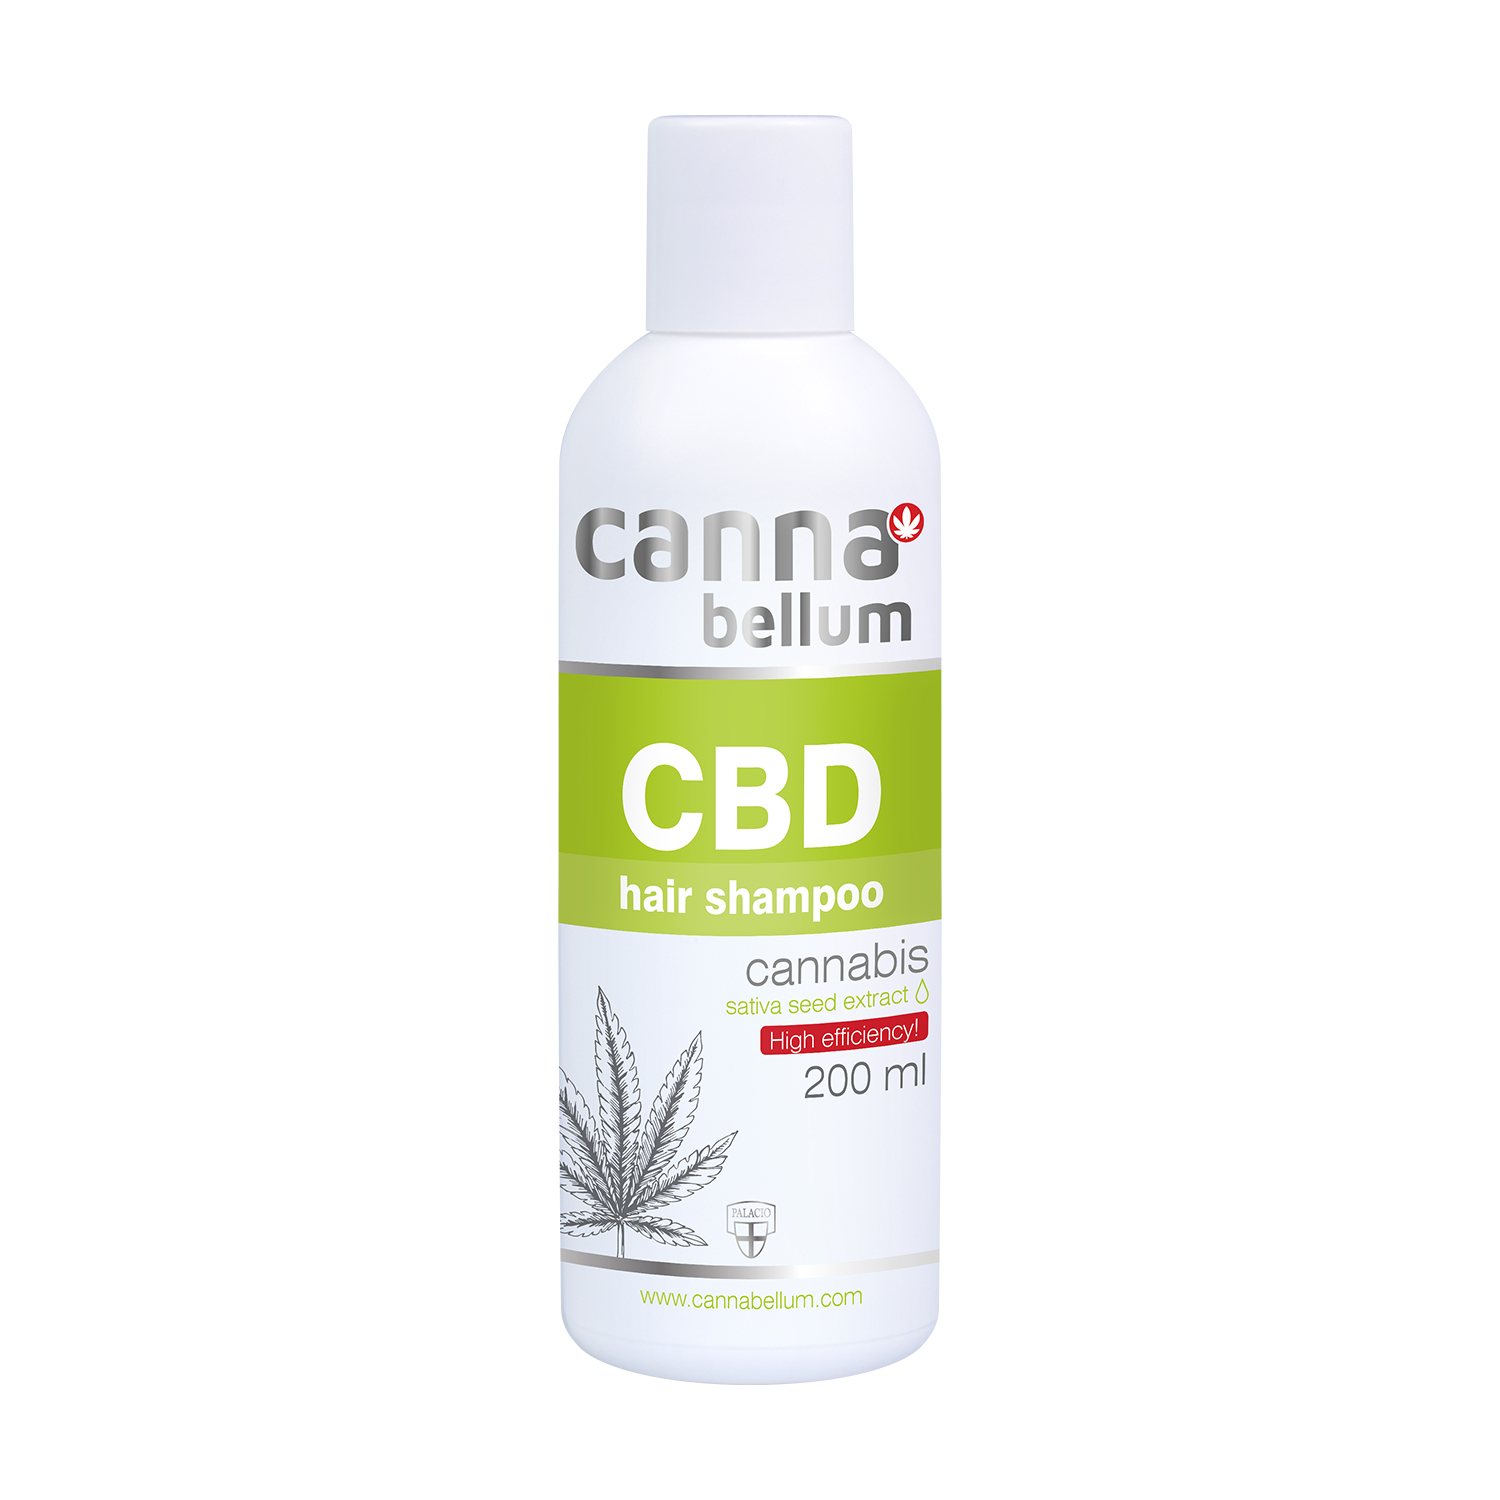 Cannabellum CBD hair shampoo 200ml P1251 WEB 58